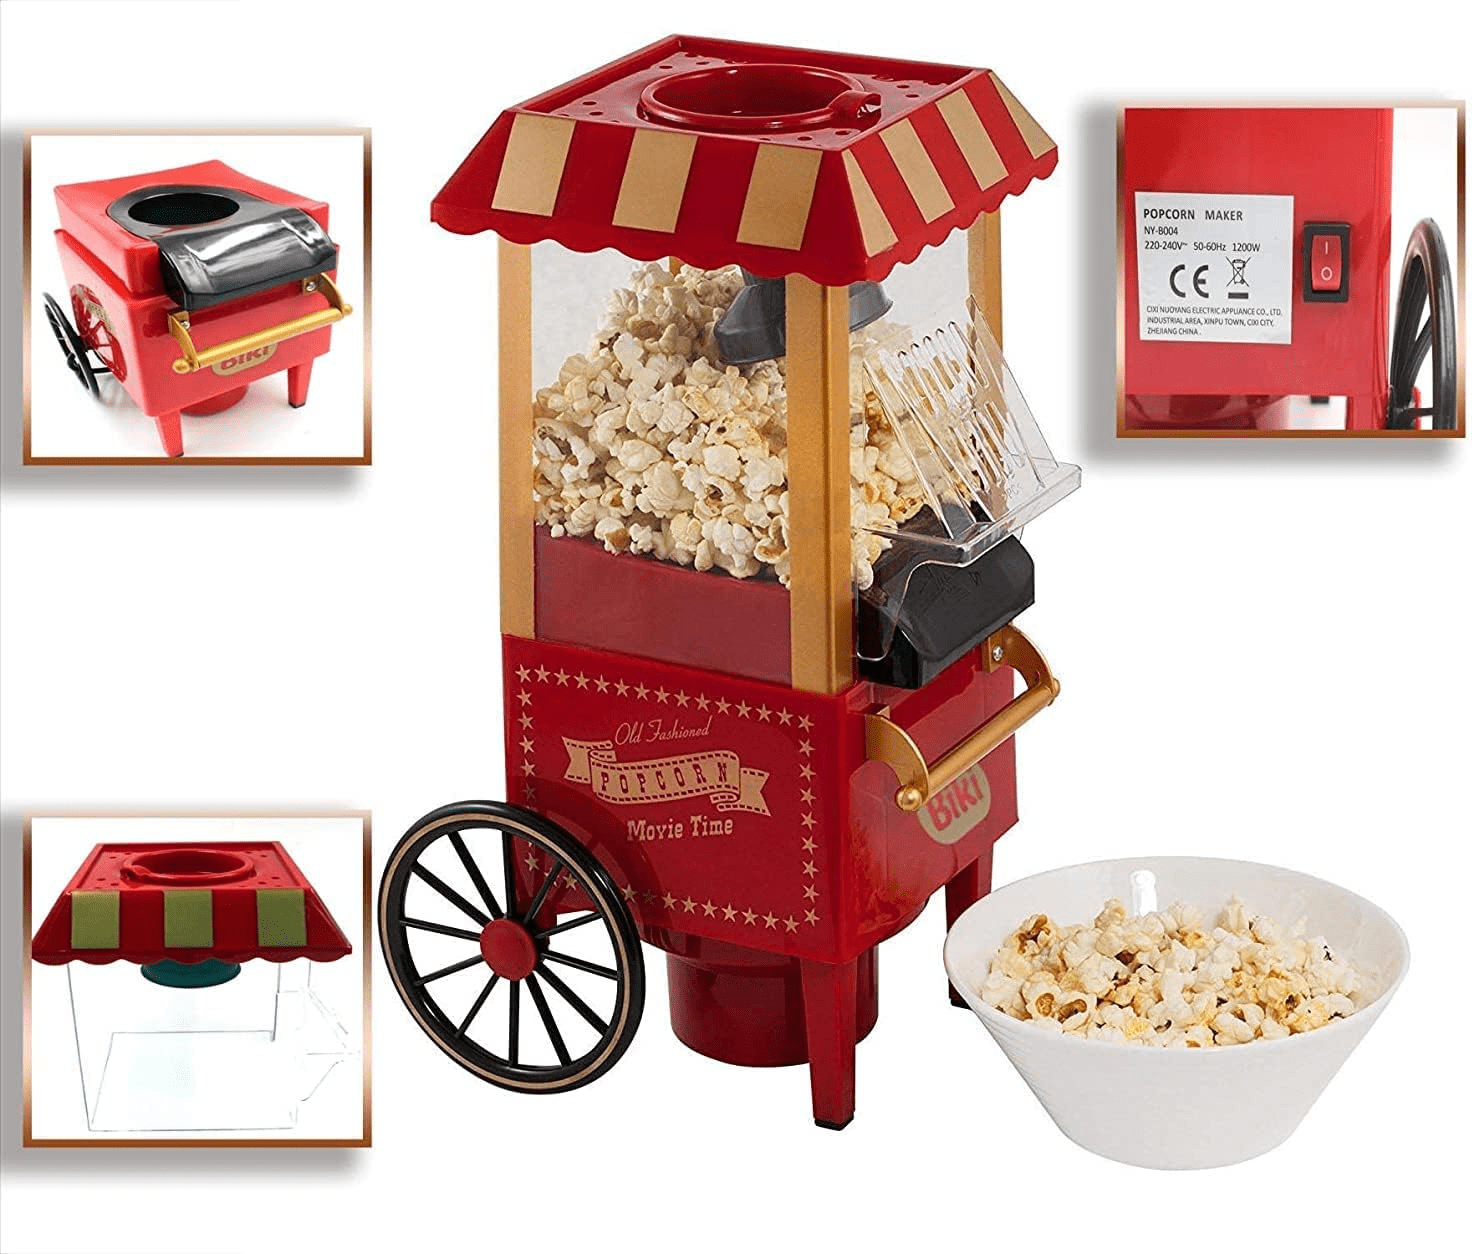 Electric Freestanding Popcorn Maker